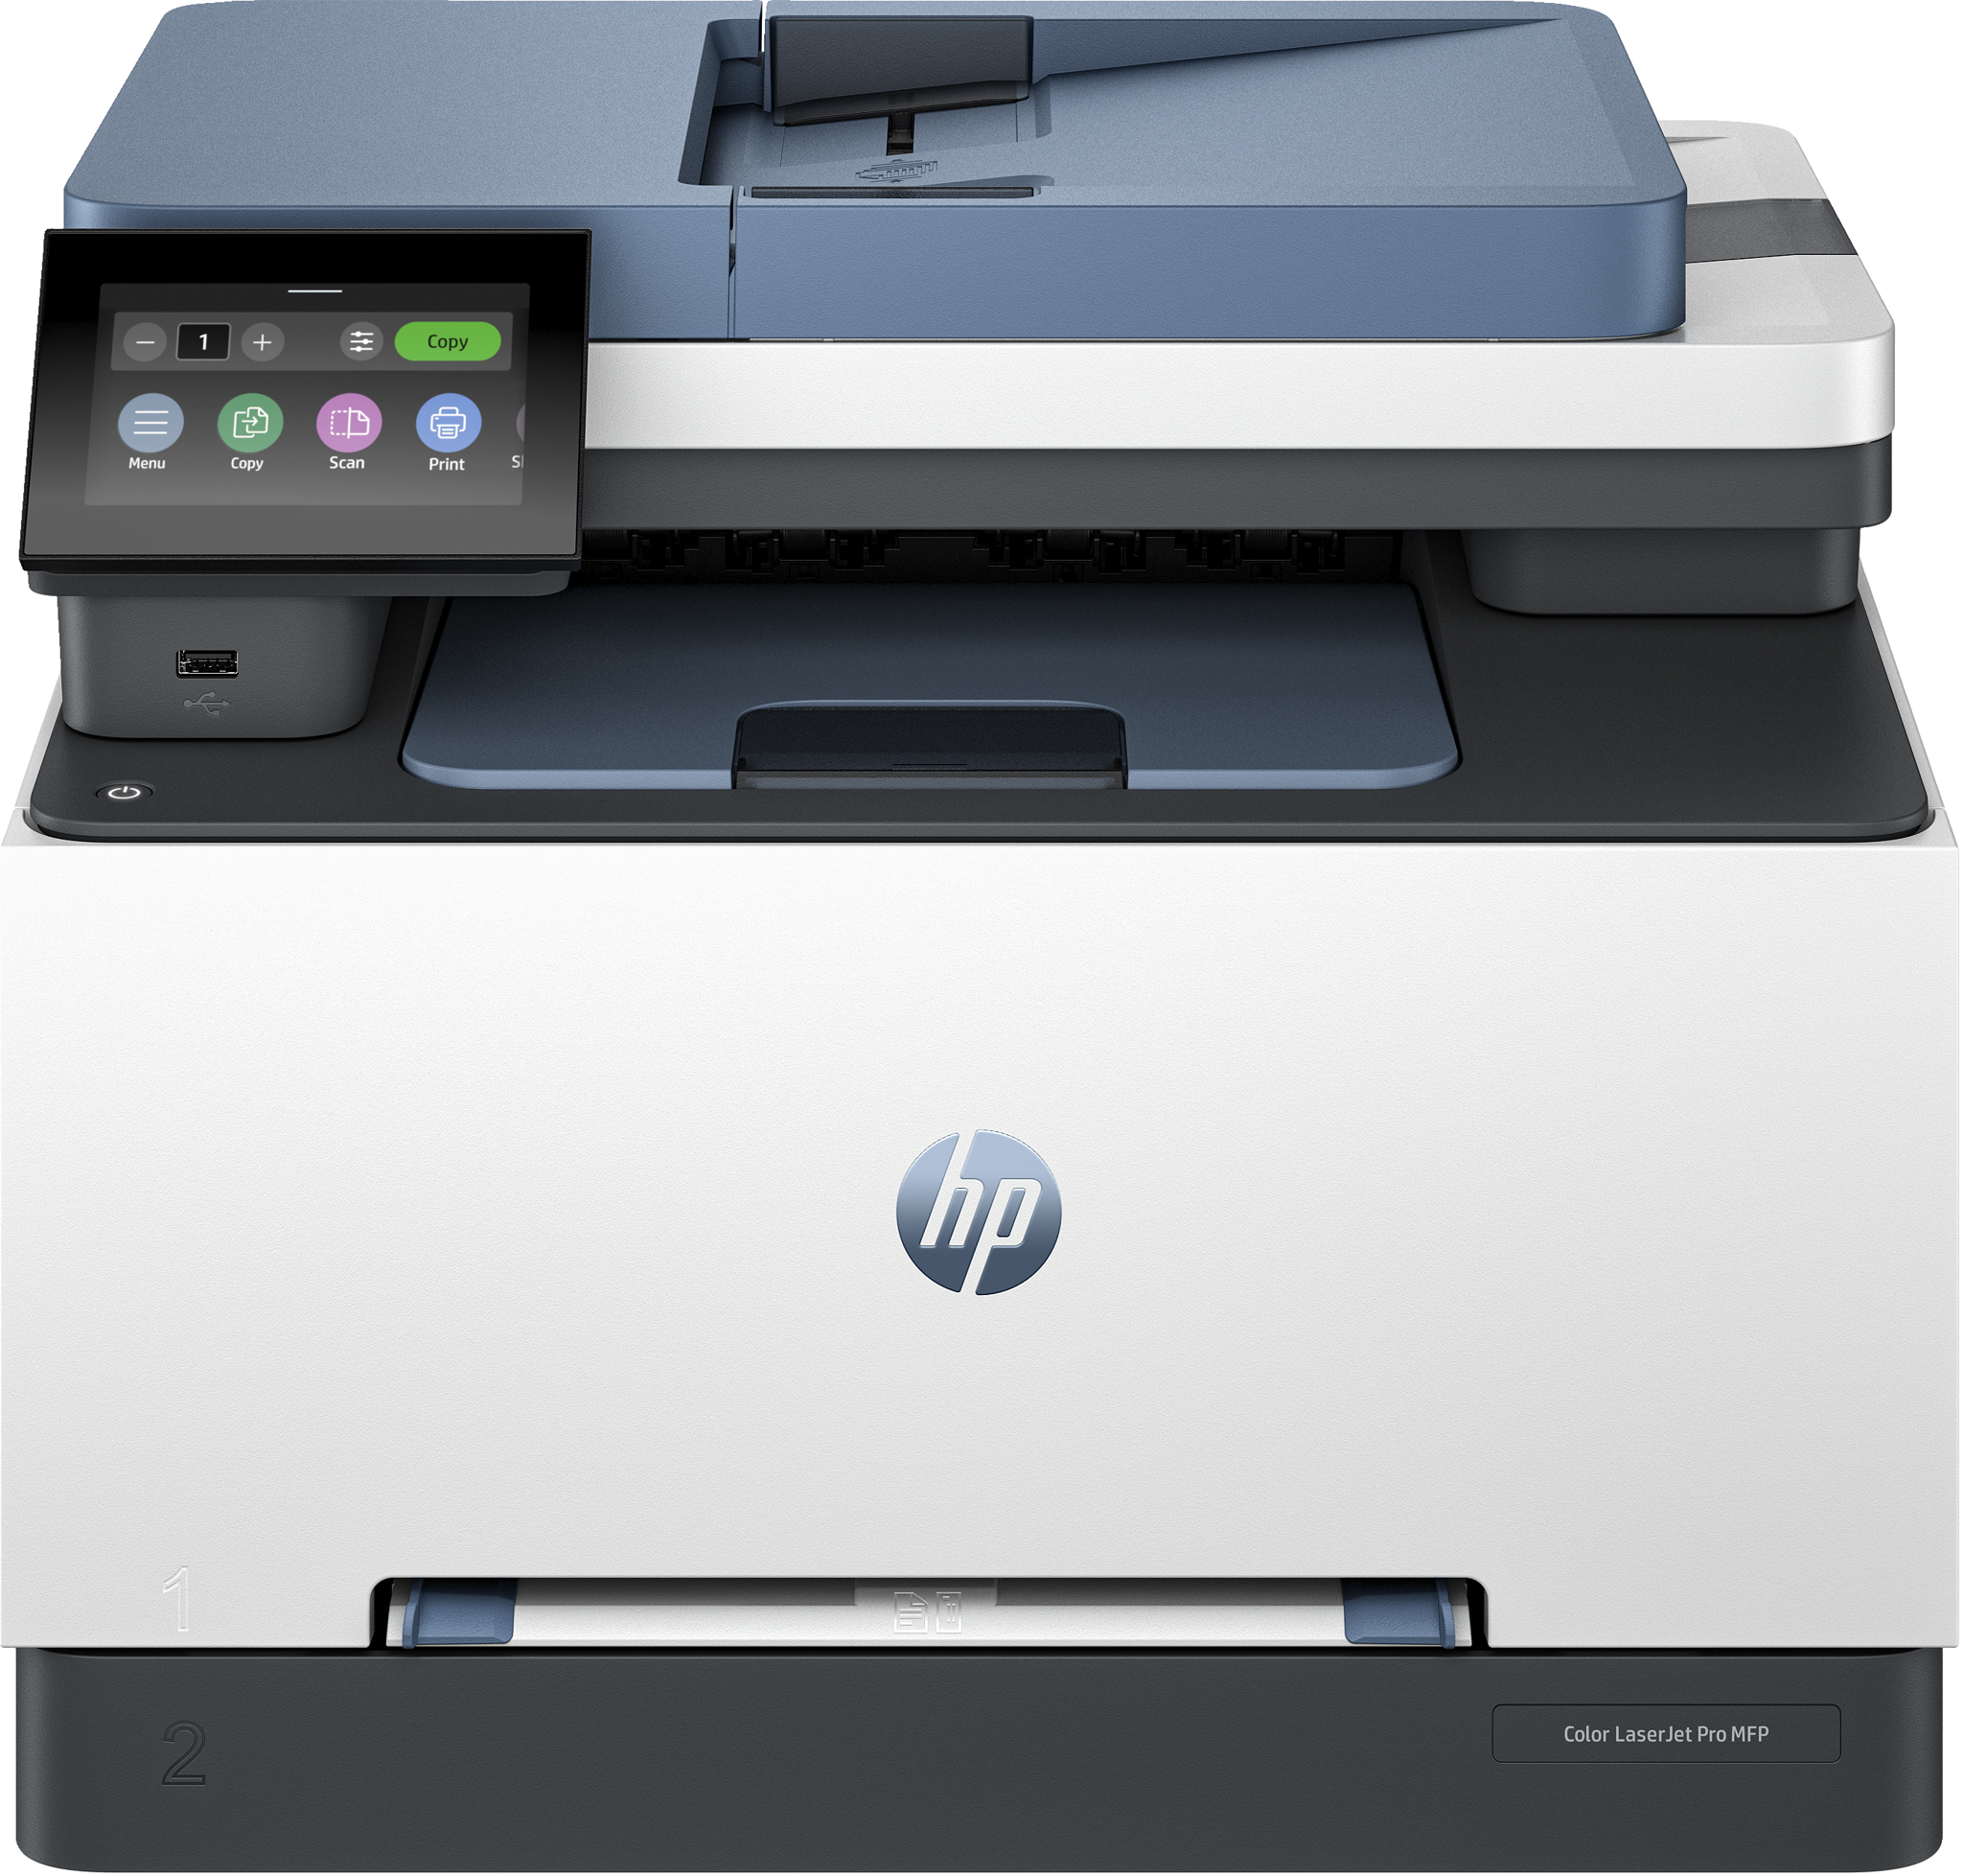 Bild von HP Color LaserJet Pro MFP 3302sdw, Laser, Farbdruck, 600 x 600 DPI, A4, Direktdruck, Blau, Grau, Weiß